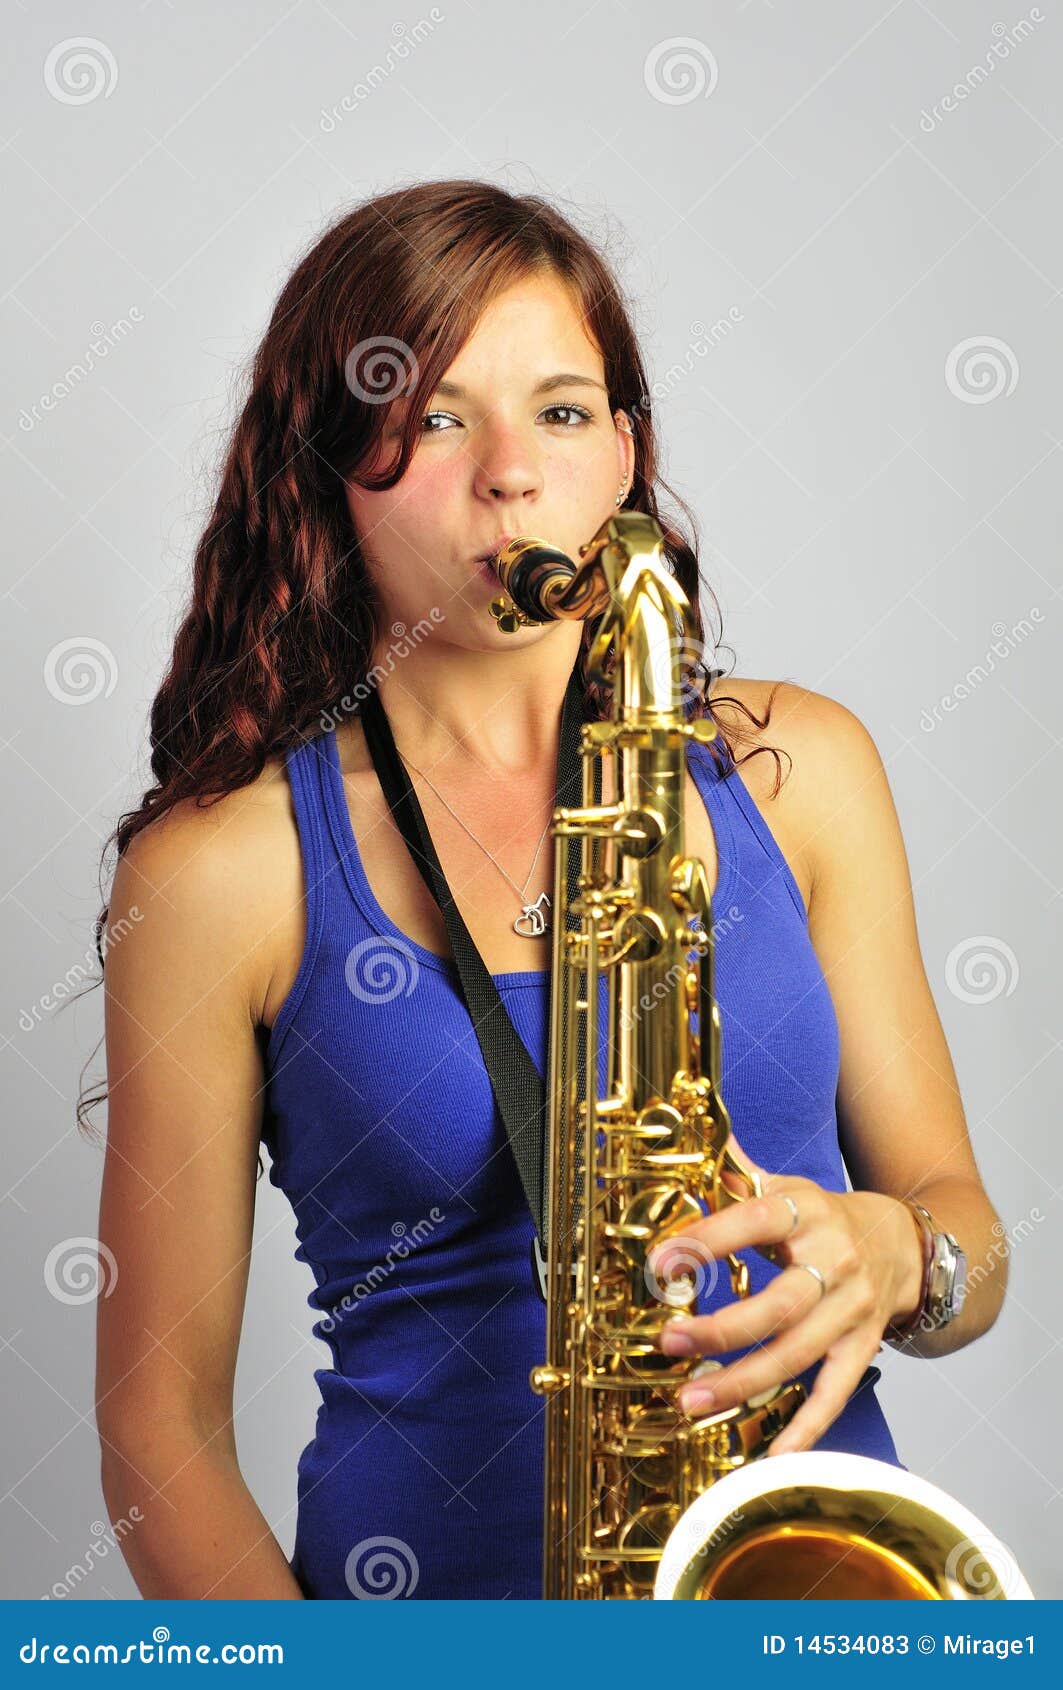 Девушка на саксофоне в студии. Девушка с саксофоном. Девушка с саксофоном на сцене. Ребенок играющий на саксофоне. Девушка с саксофоном в студии звукозаписи.